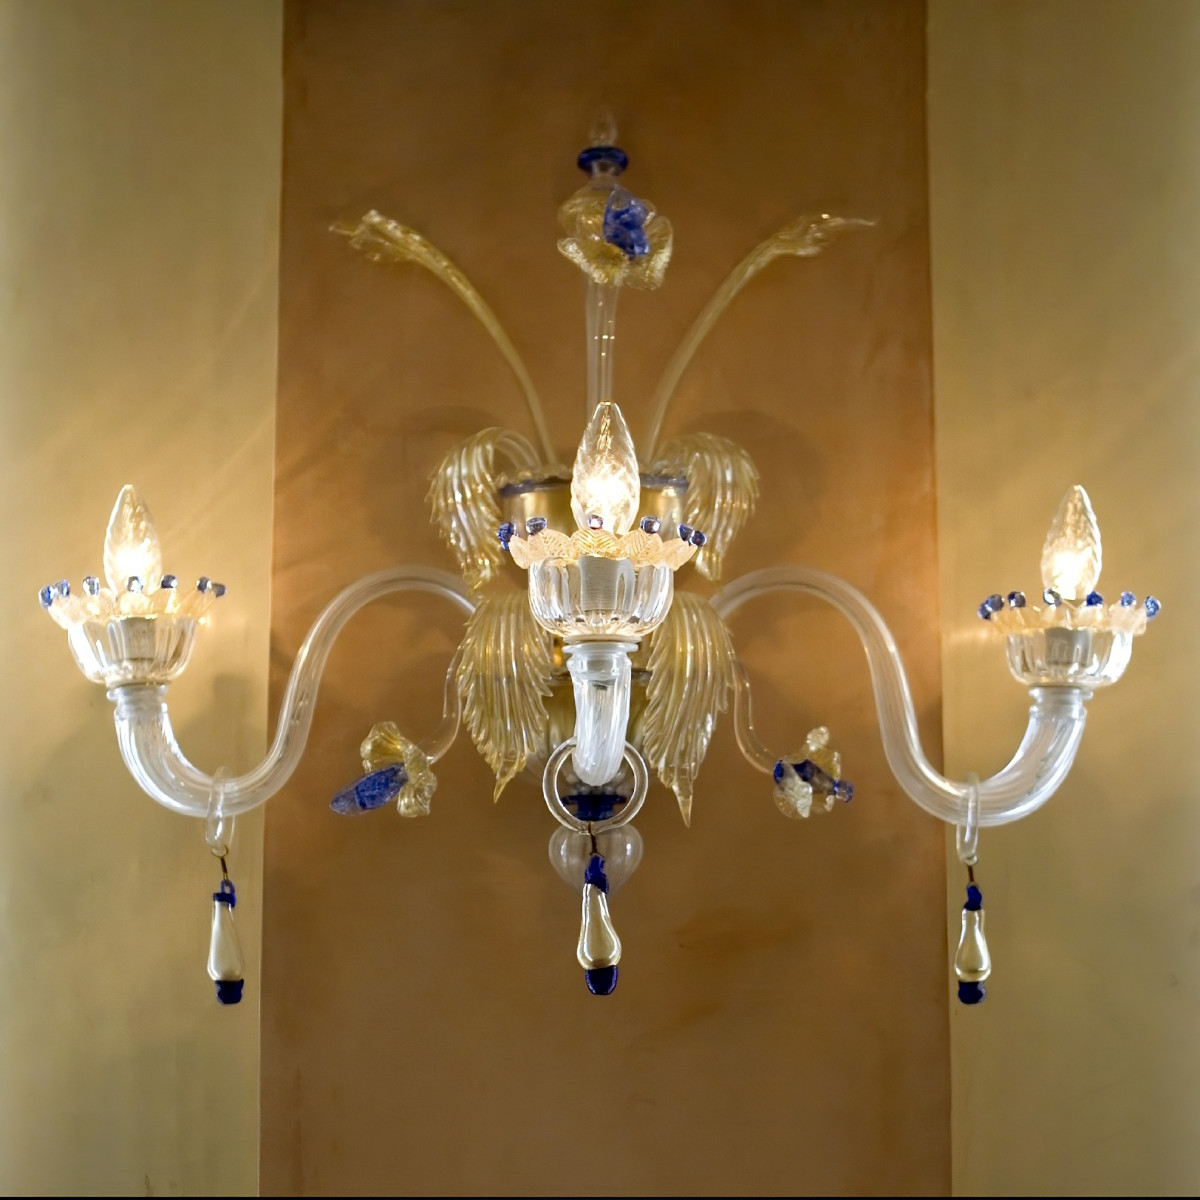 Allegro 3 lumieres applique de Murano - couleur transparent or bleu